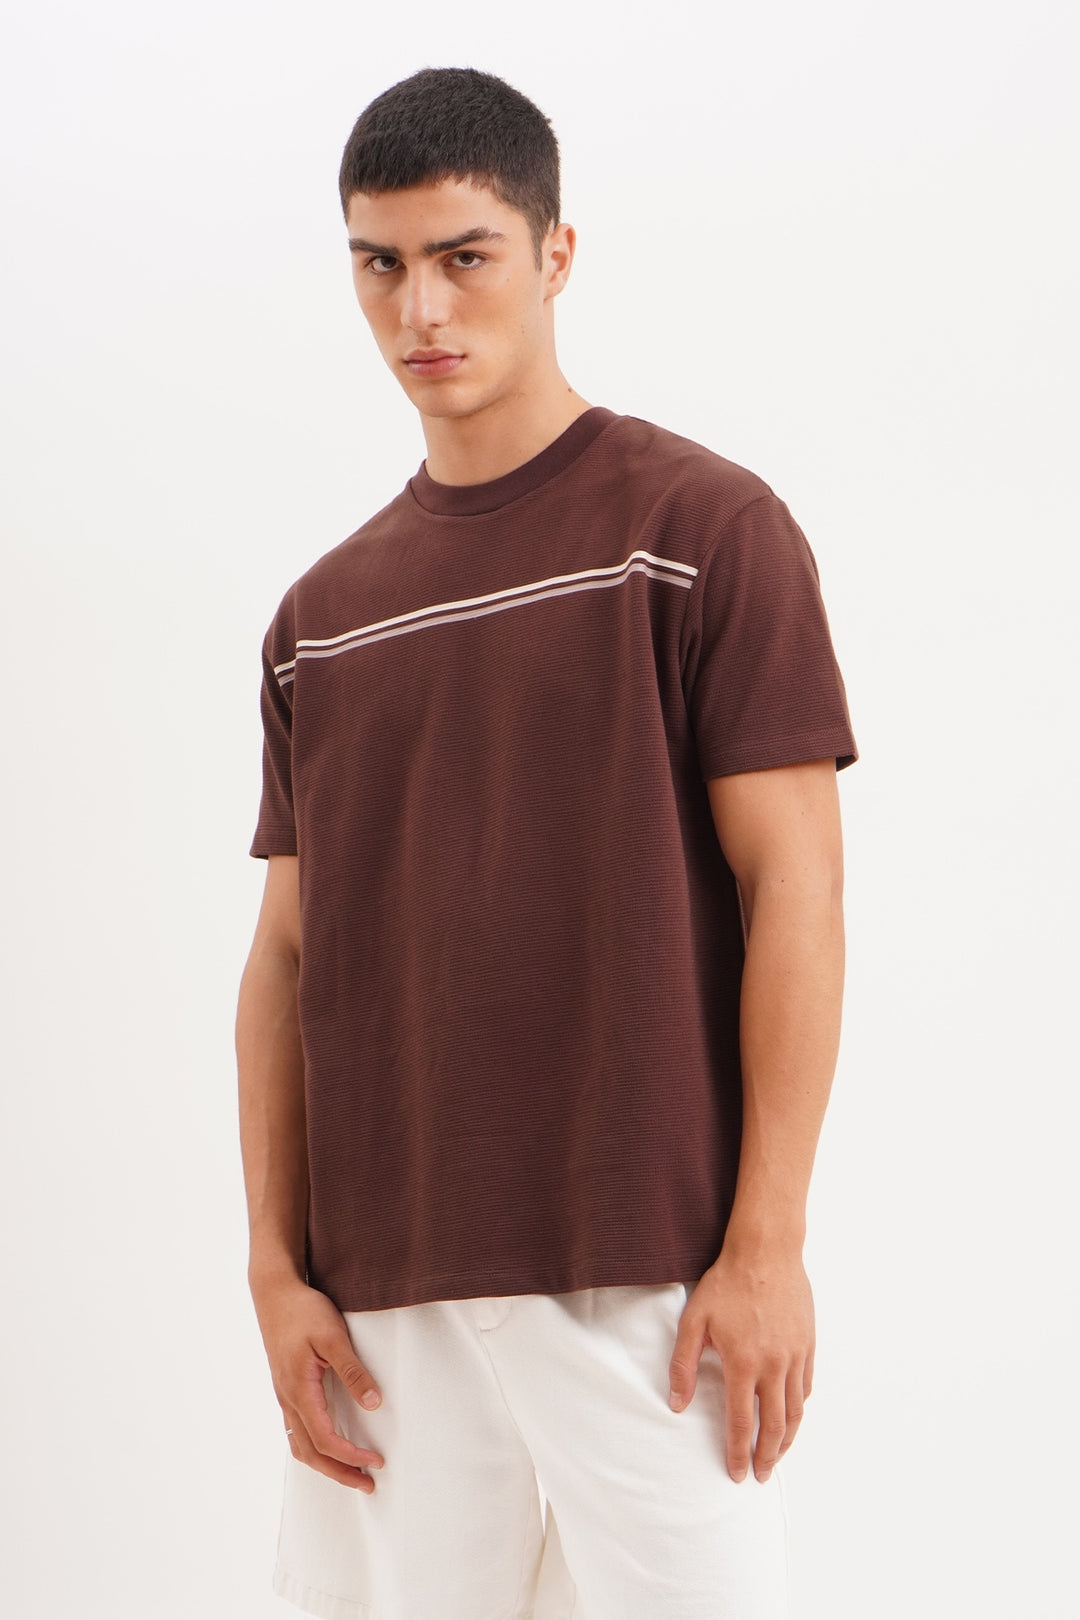 Penshoppe Semi Fit Tshirt With Striped Pocket For Men (Dark Gray)